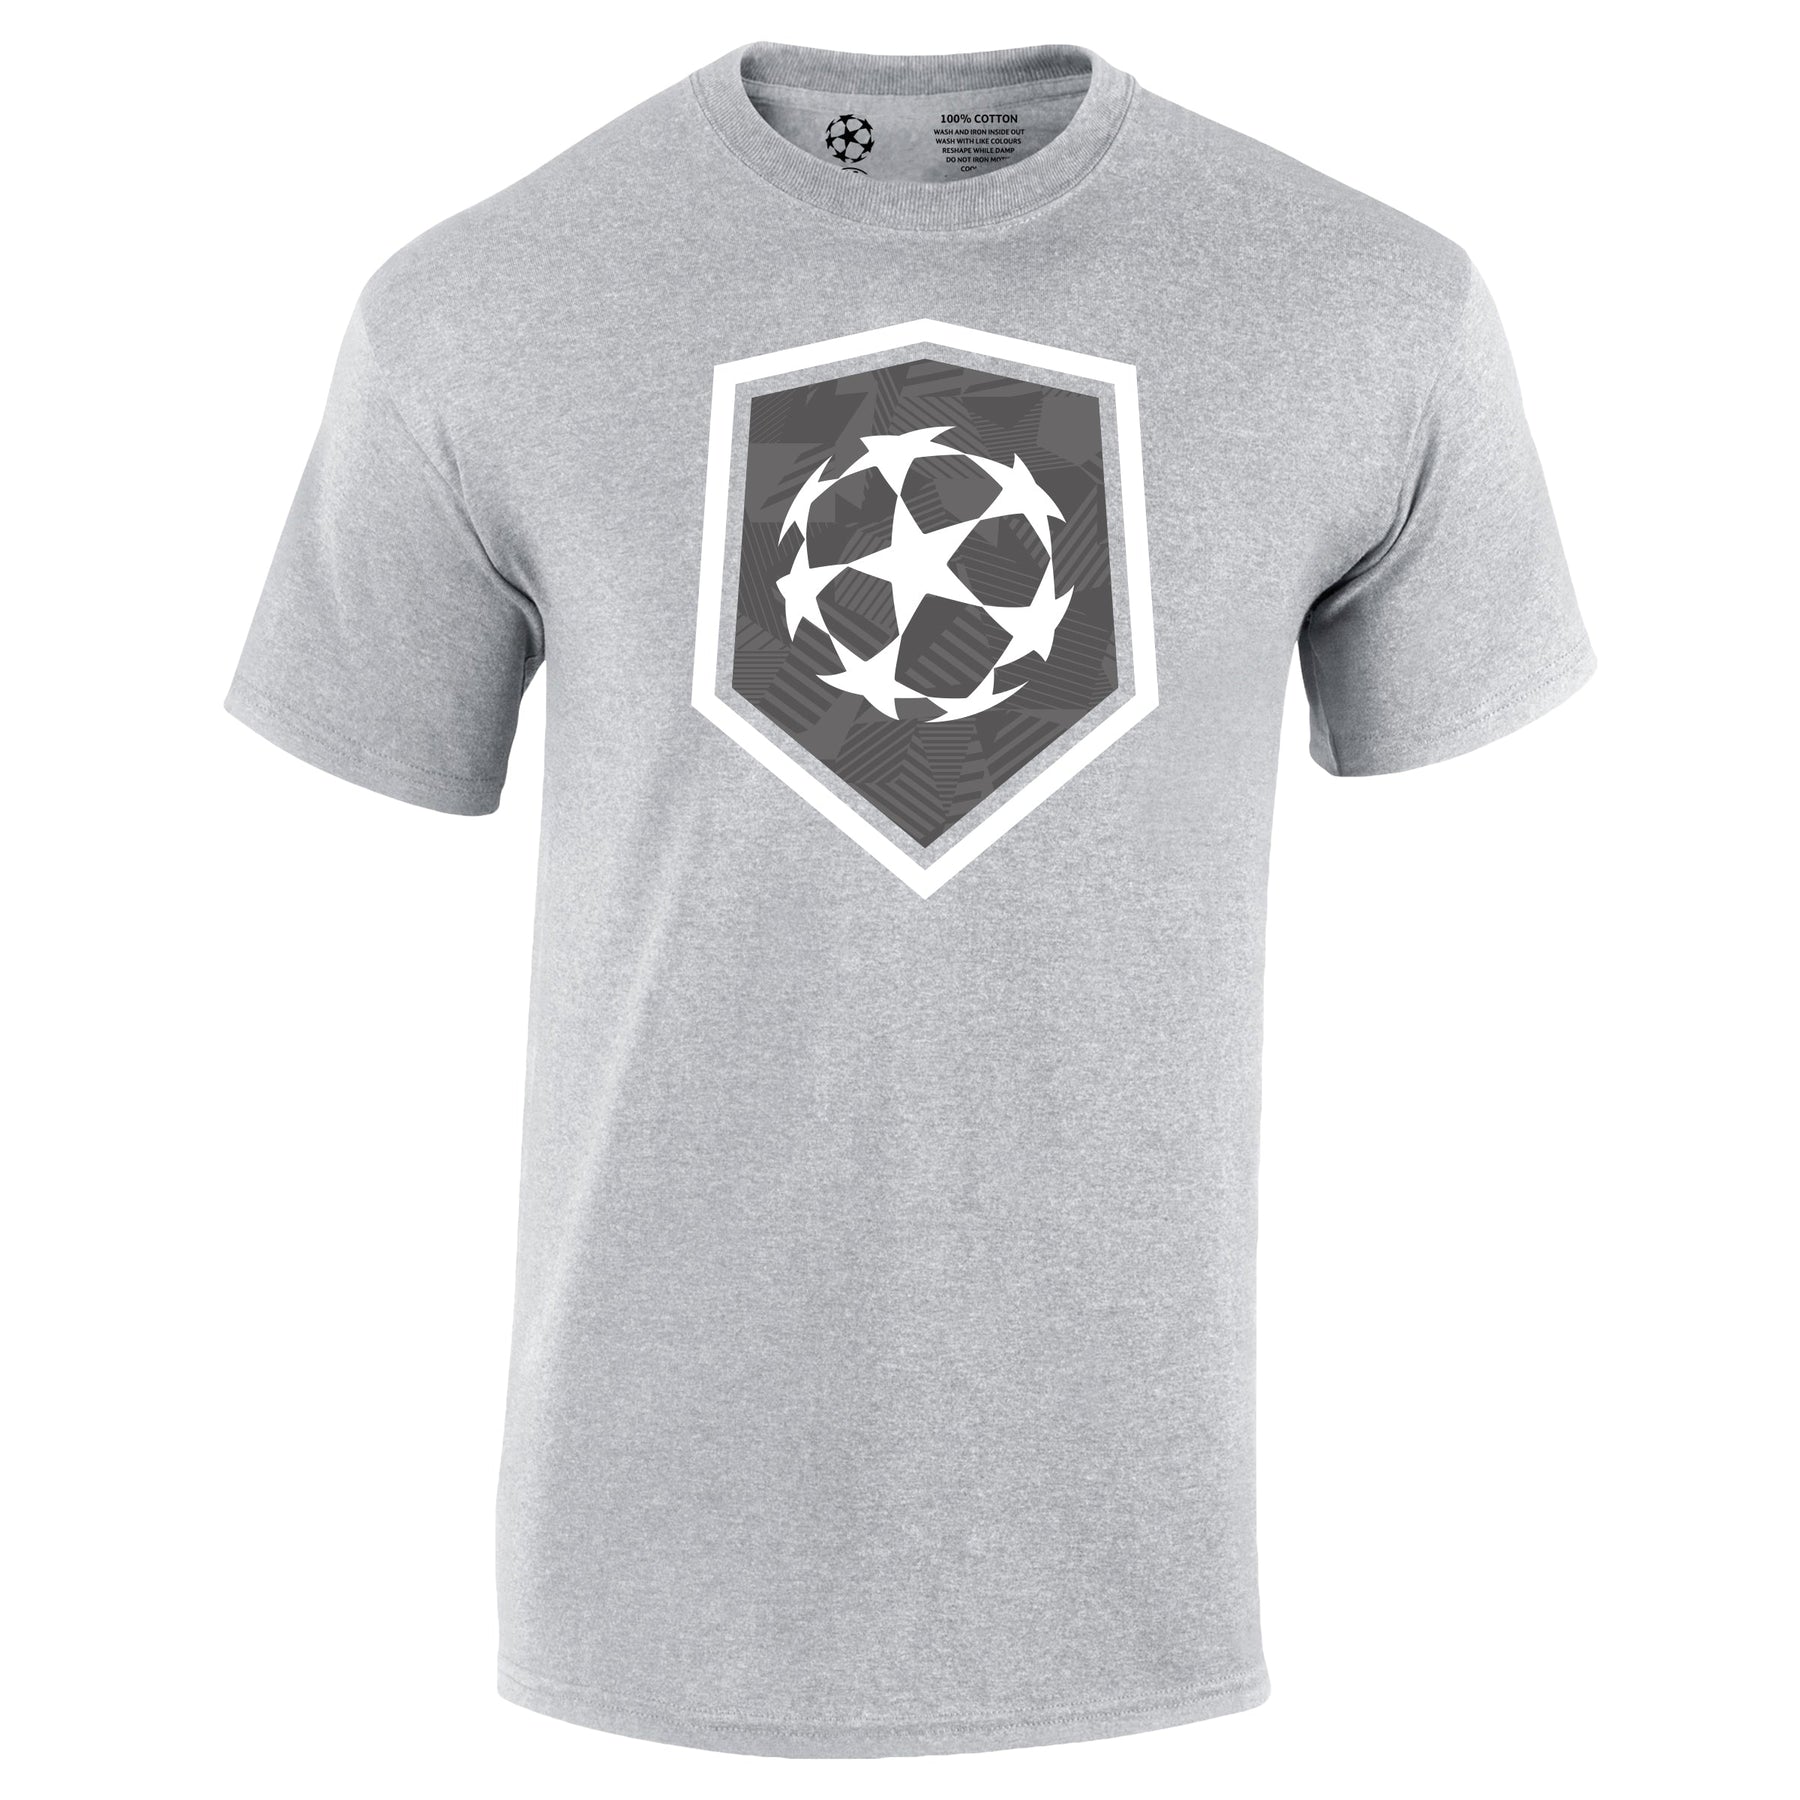 Champions League Starball Shield T-Shirt Grey